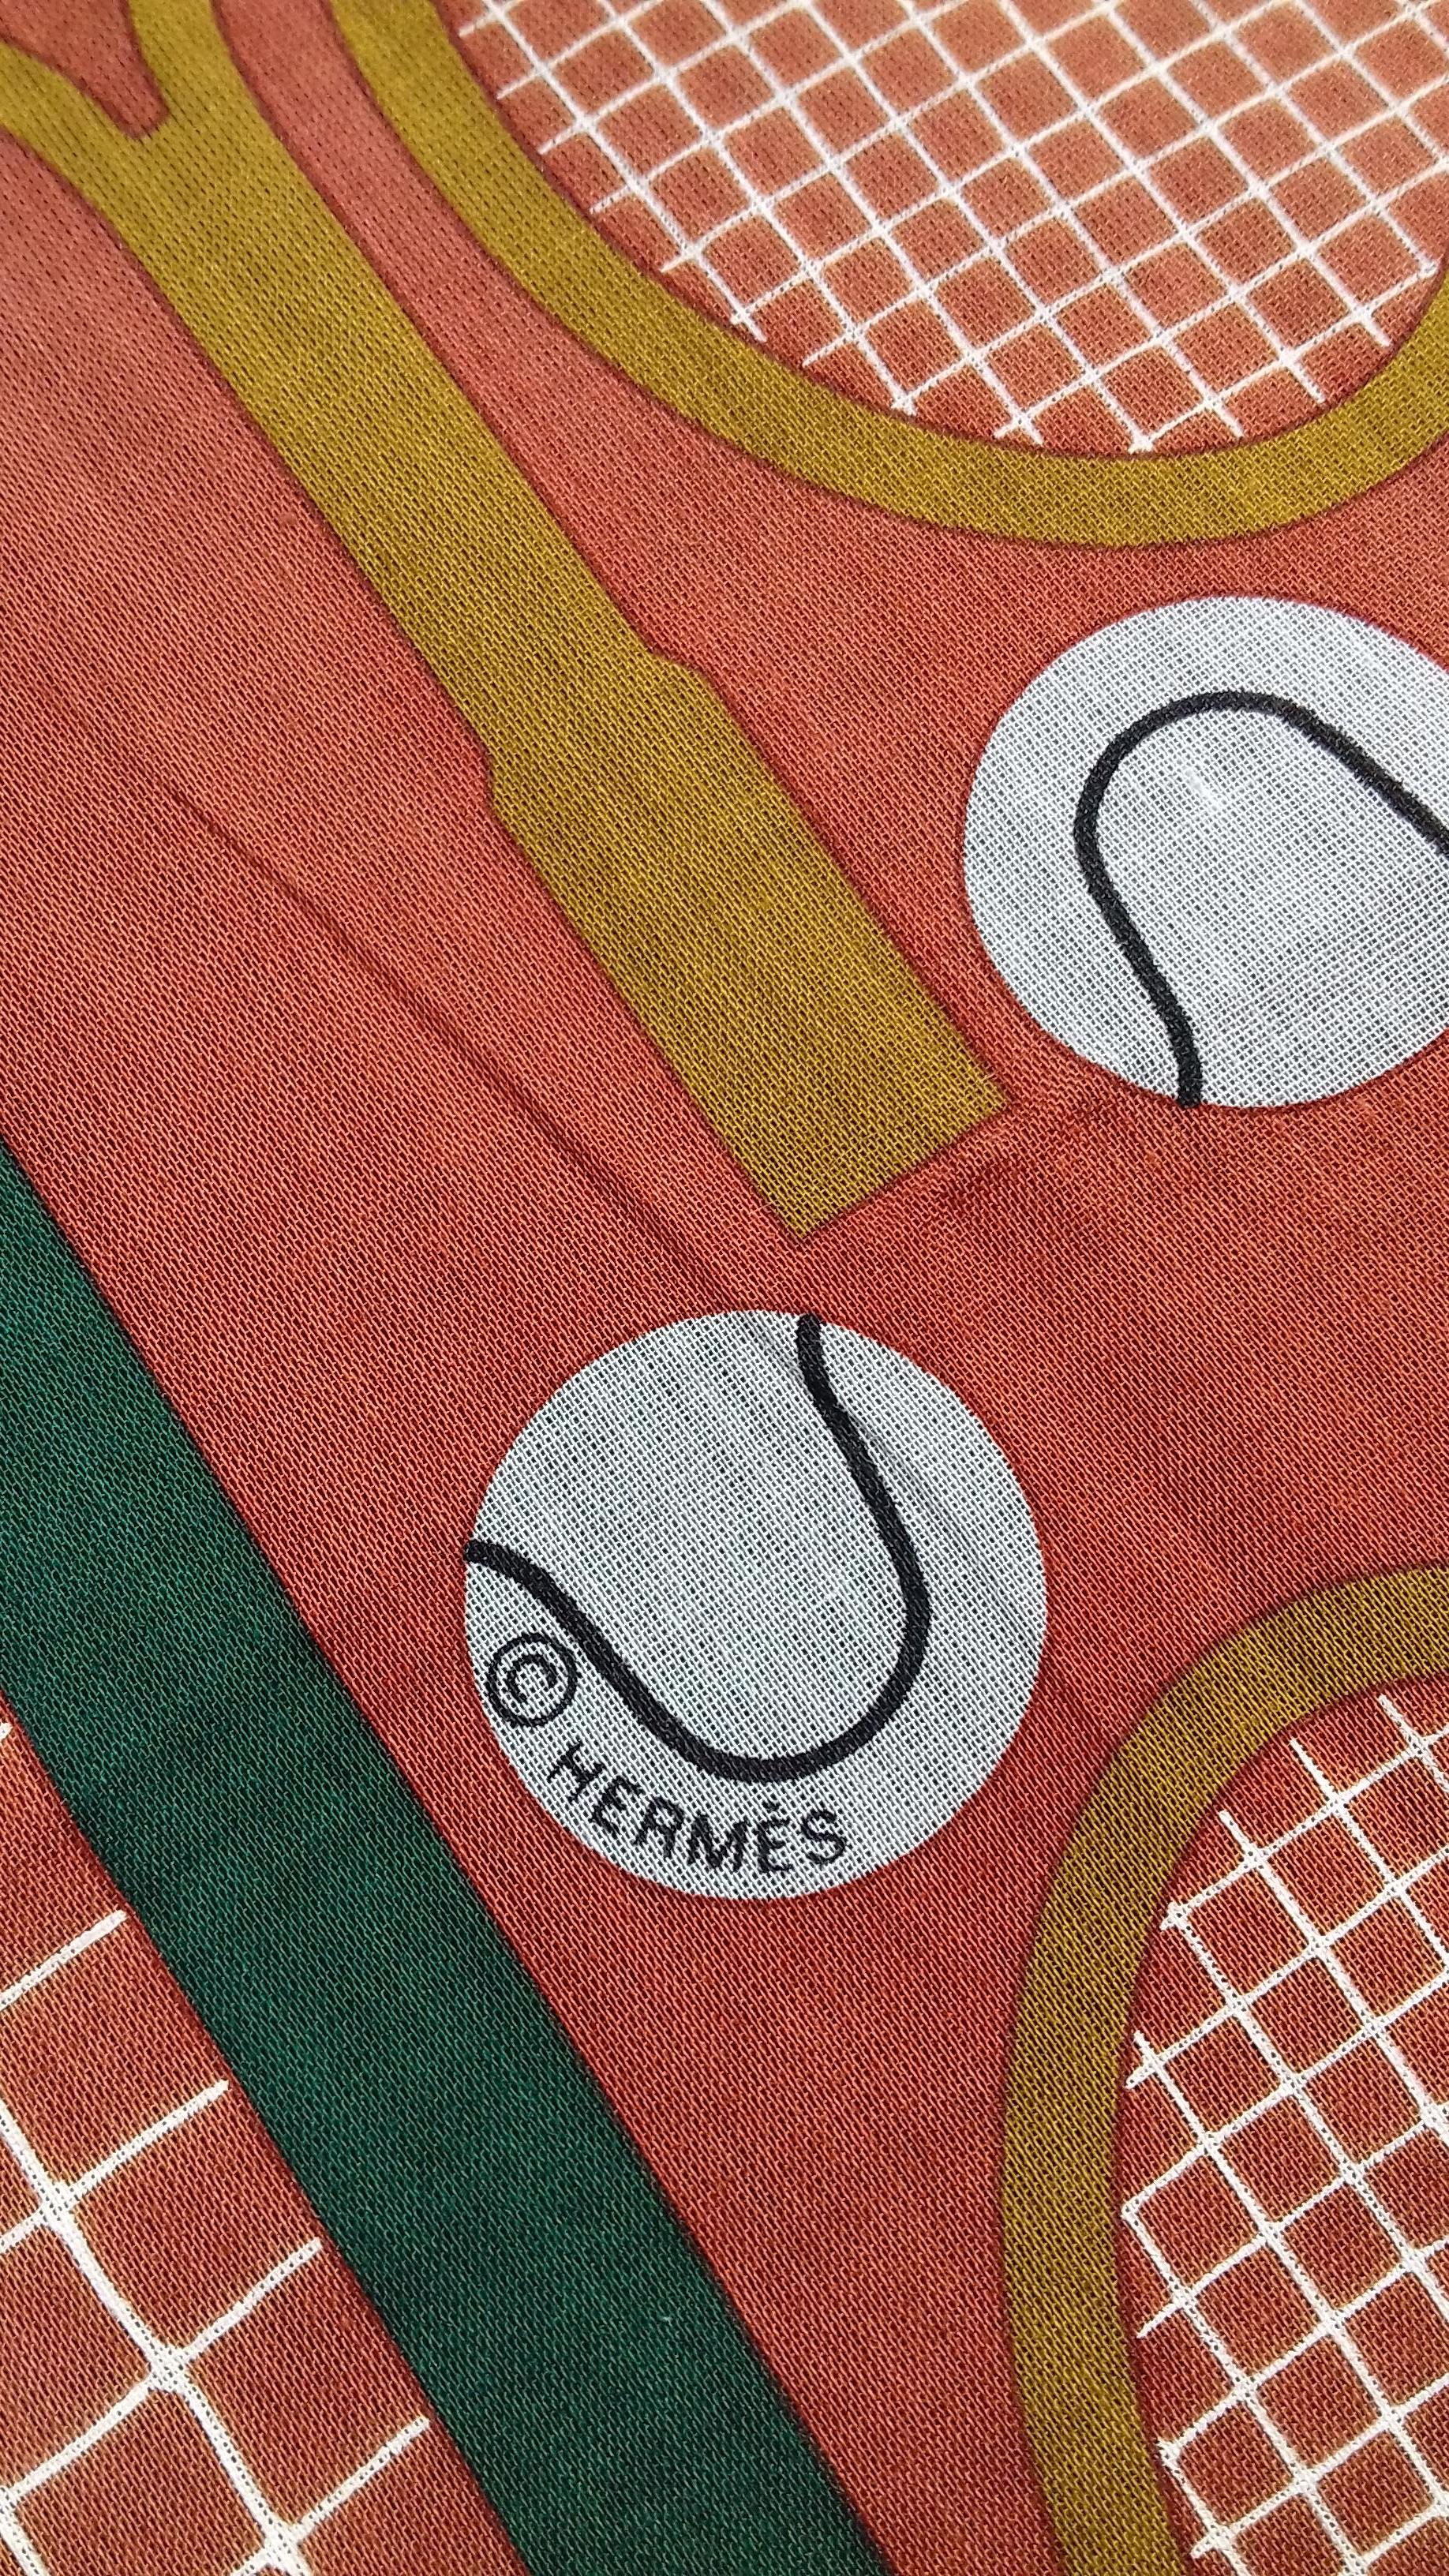 Hermès Cotton Charm Scarf Tennis Origny 75 years Lacoste Anniversary 26' RARE 2